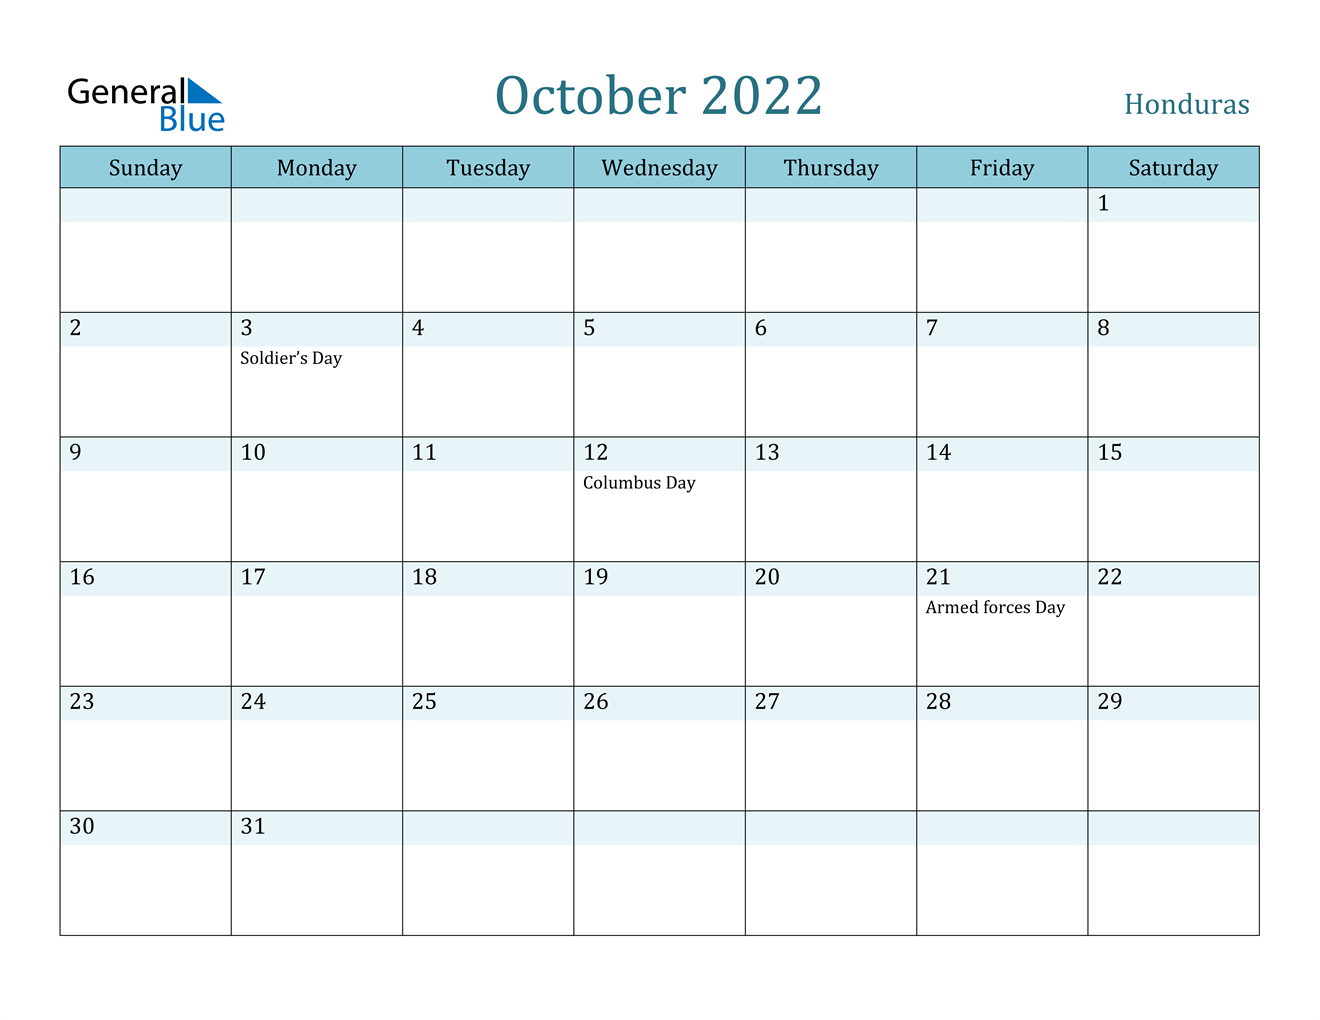 October 2022 Calendar - Honduras